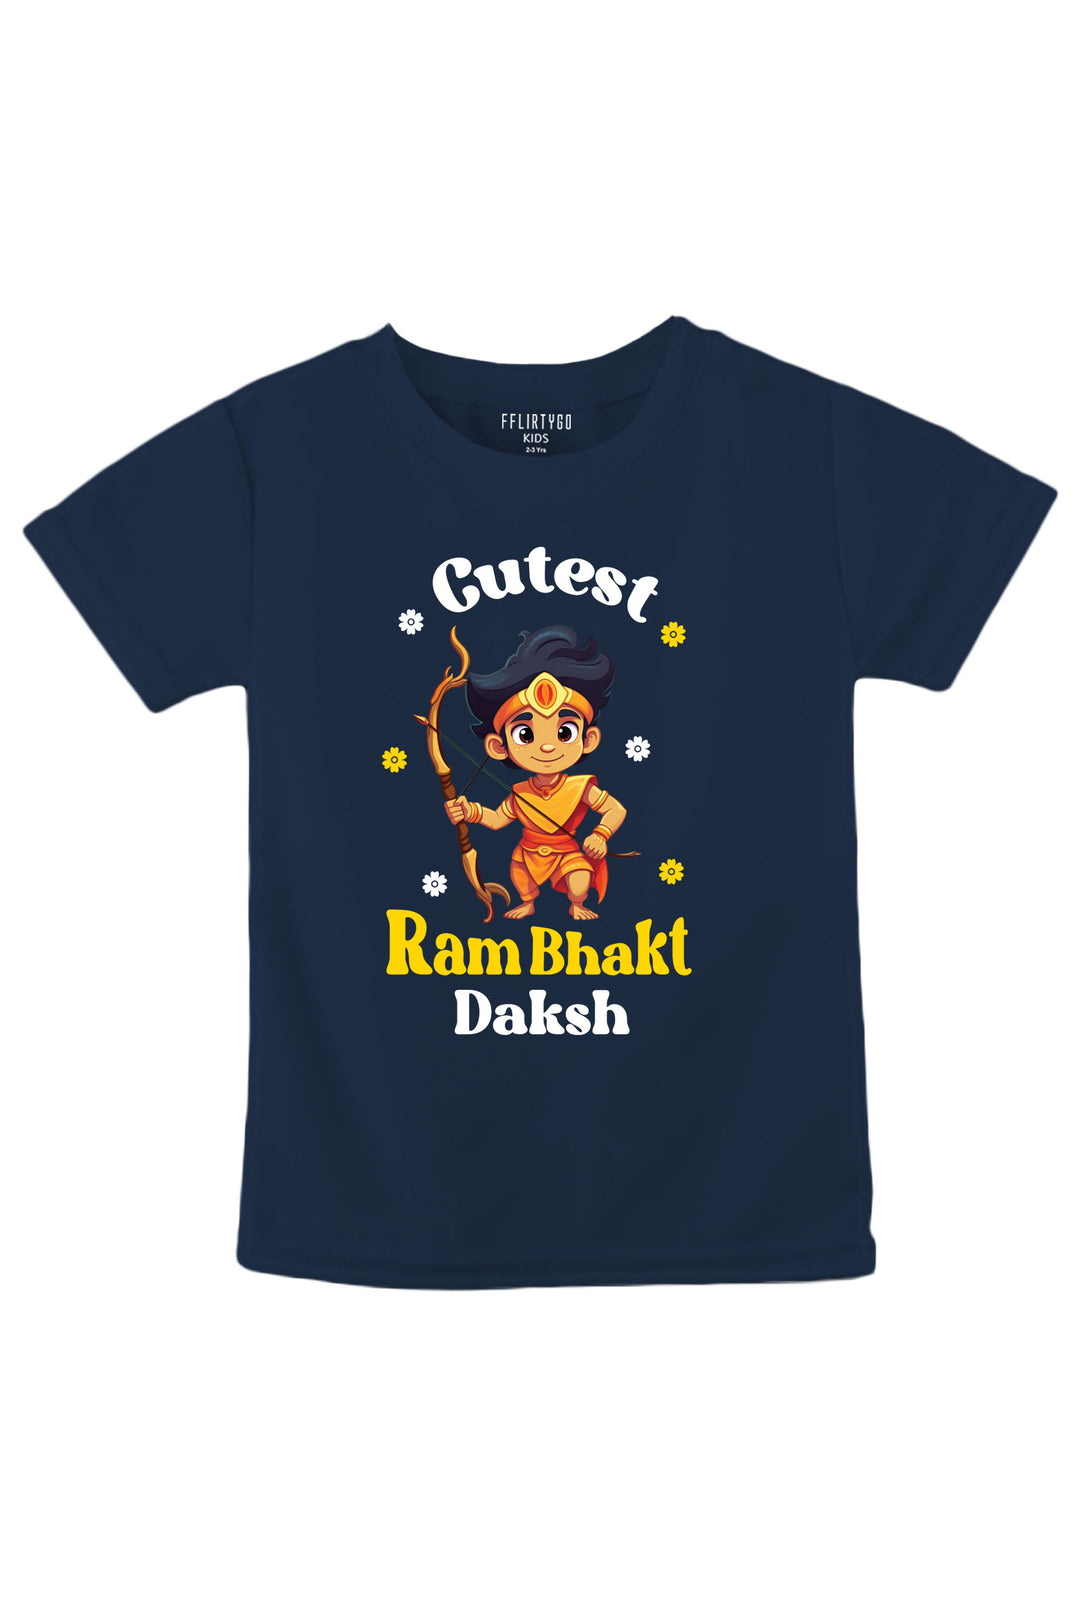 Cutest Ram Bhakt Kids T Shirt w/ Custom Name